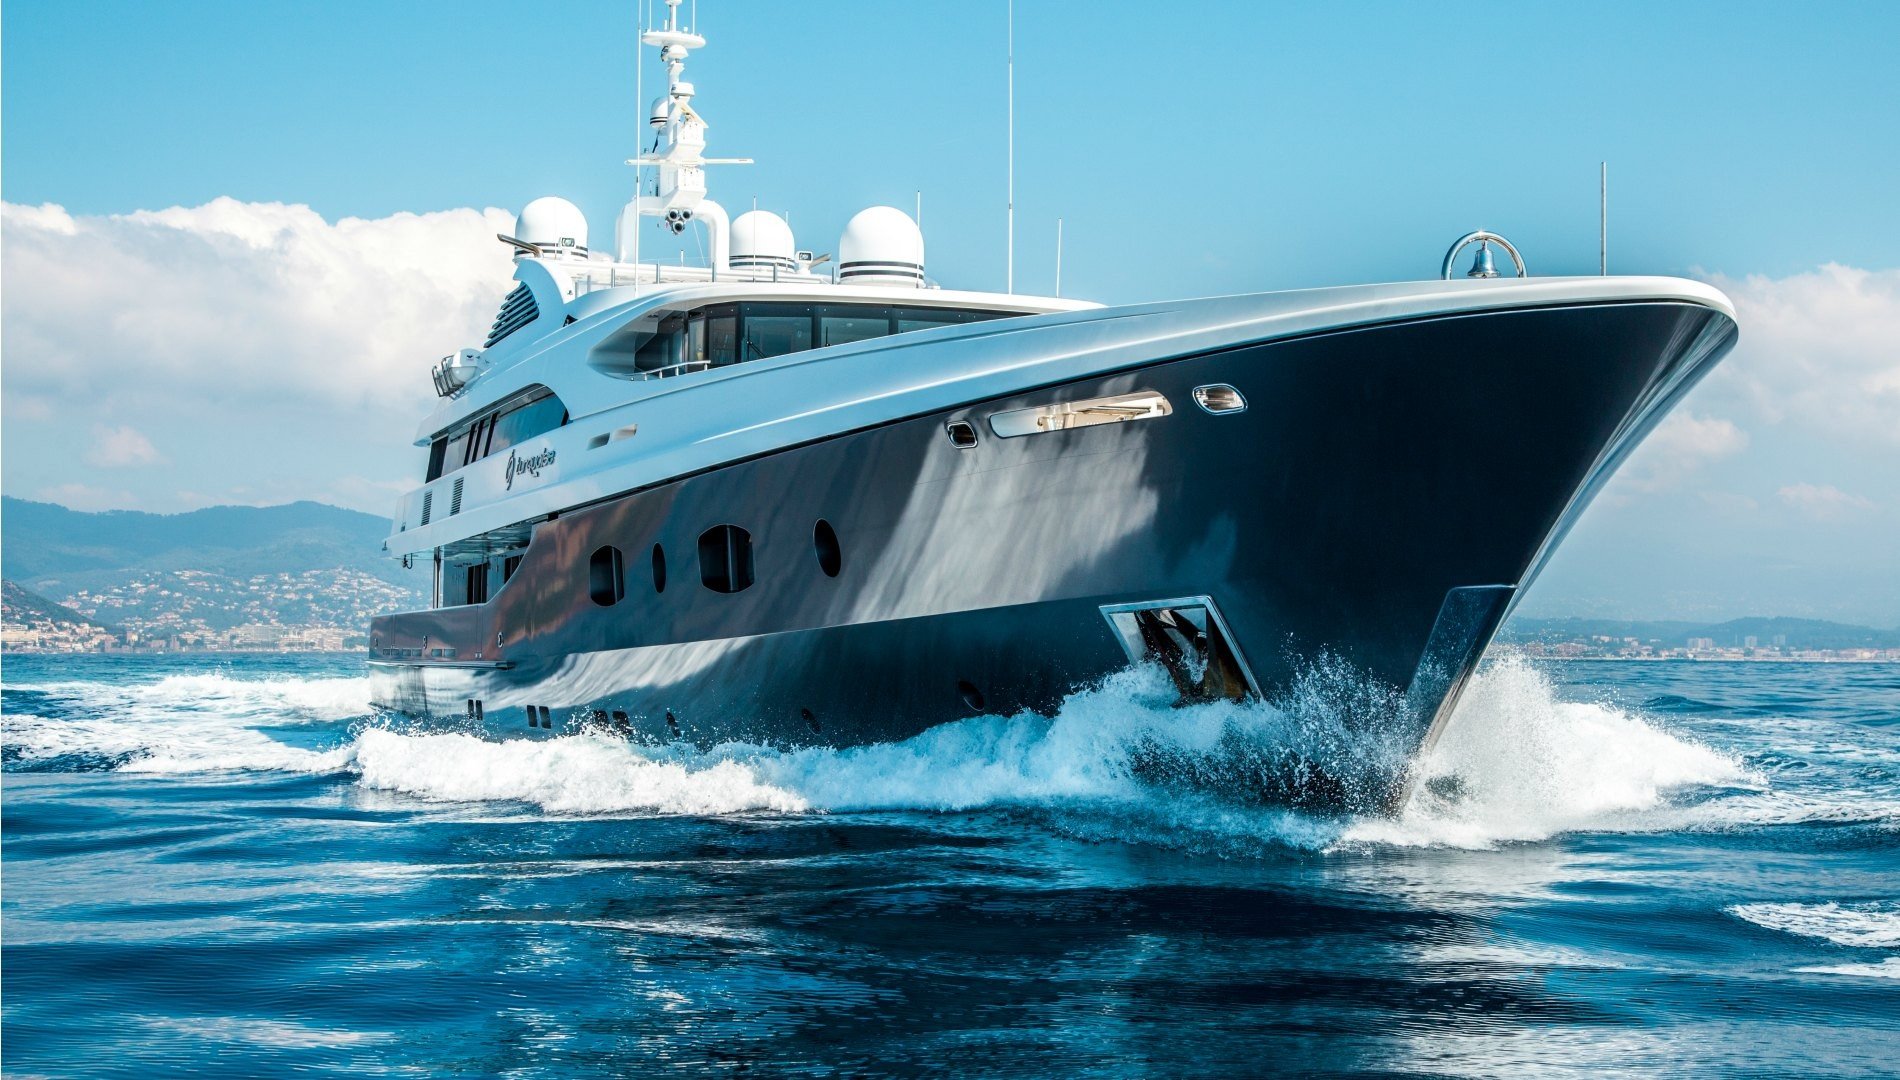 turquoise yacht 55m